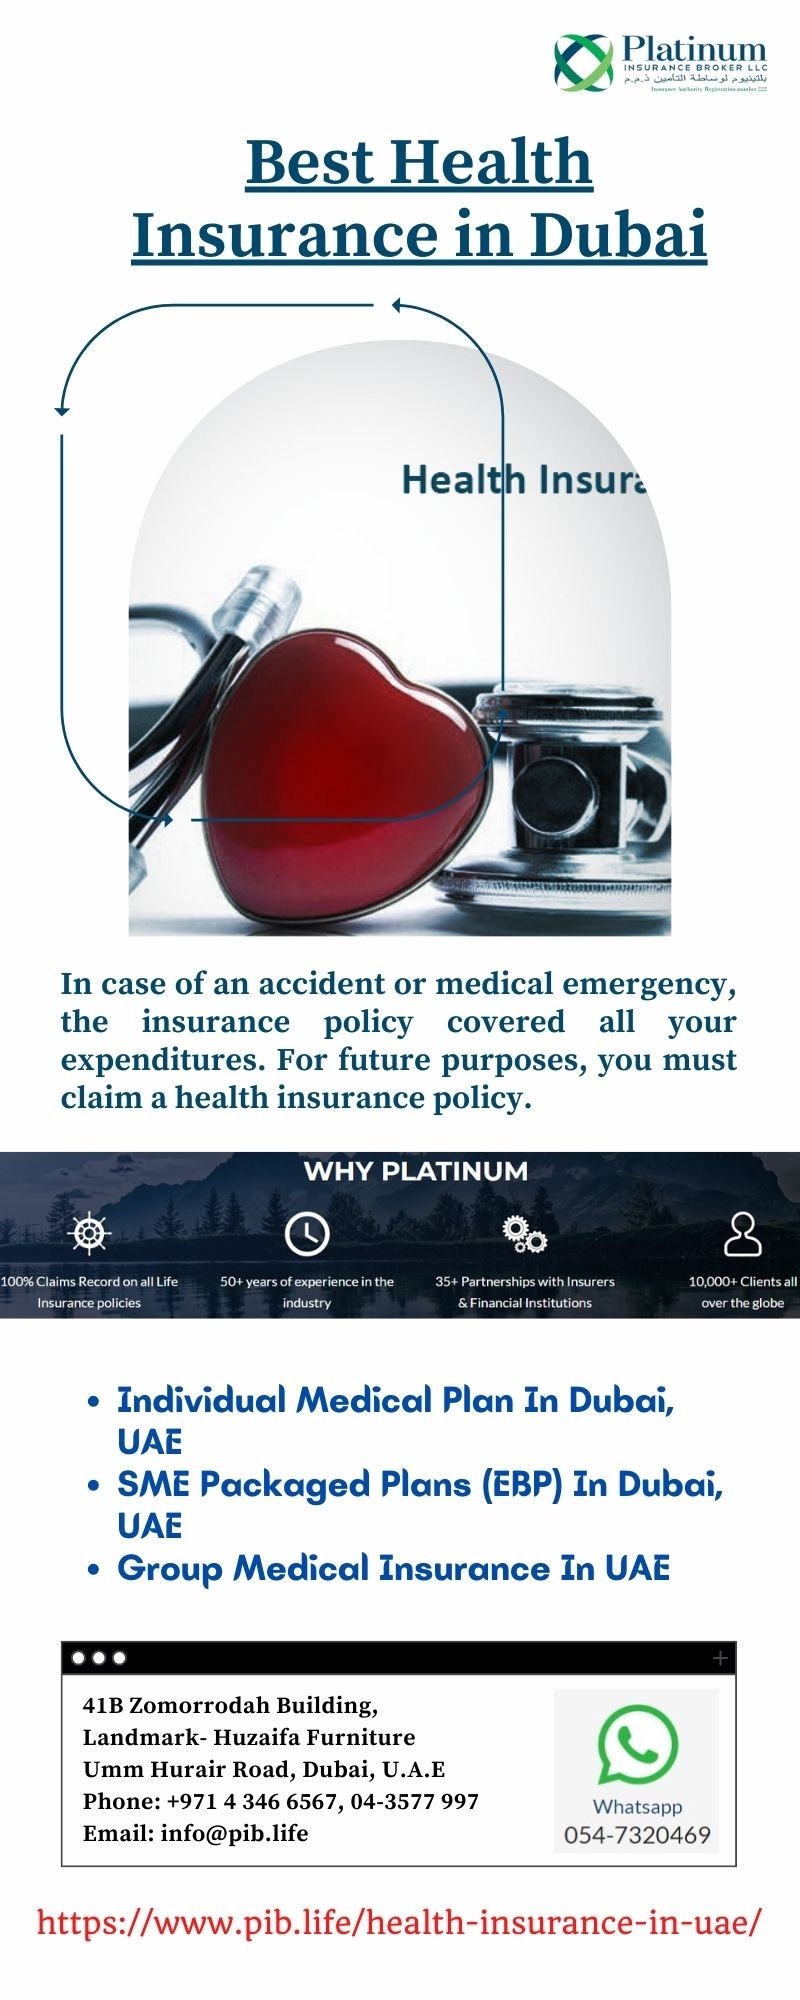 Choose The Best Health Insurance in Dubai